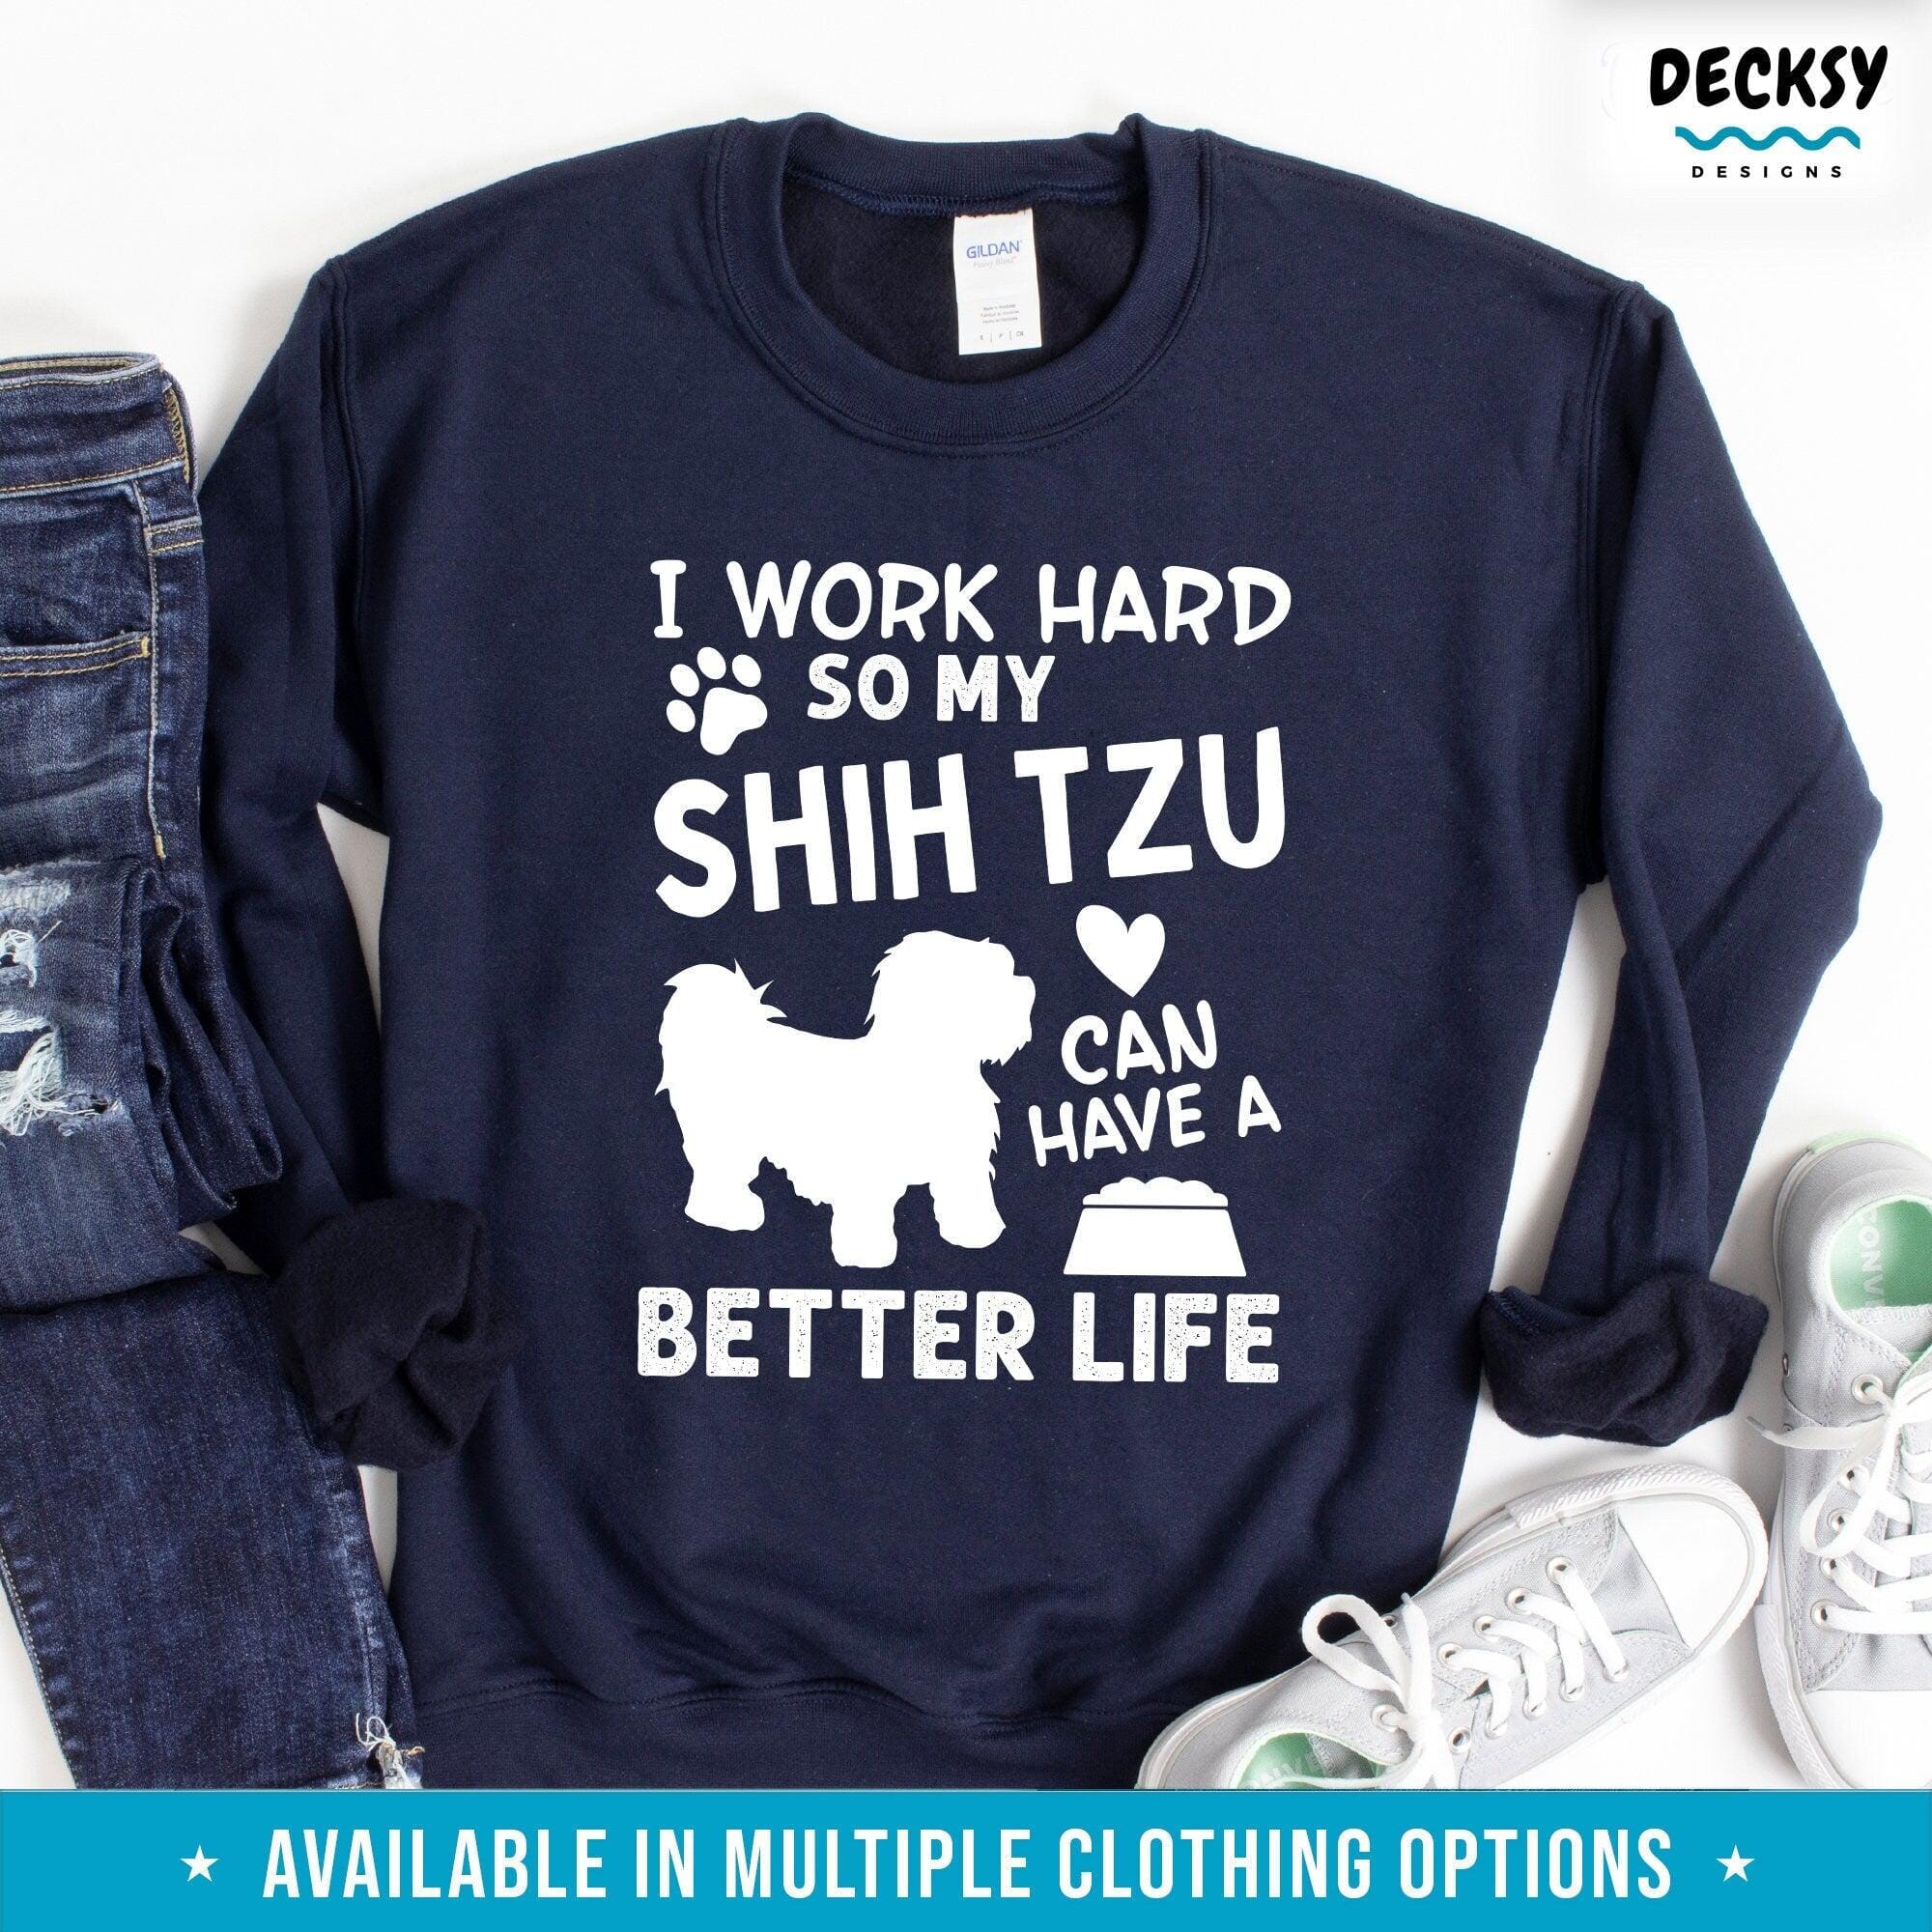 Funny Shih Tzu Shirt, Shih Tzu Dog Gift-Clothing:Gender-Neutral Adult Clothing:Tops & Tees:T-shirts:Graphic Tees-DecksyDesigns